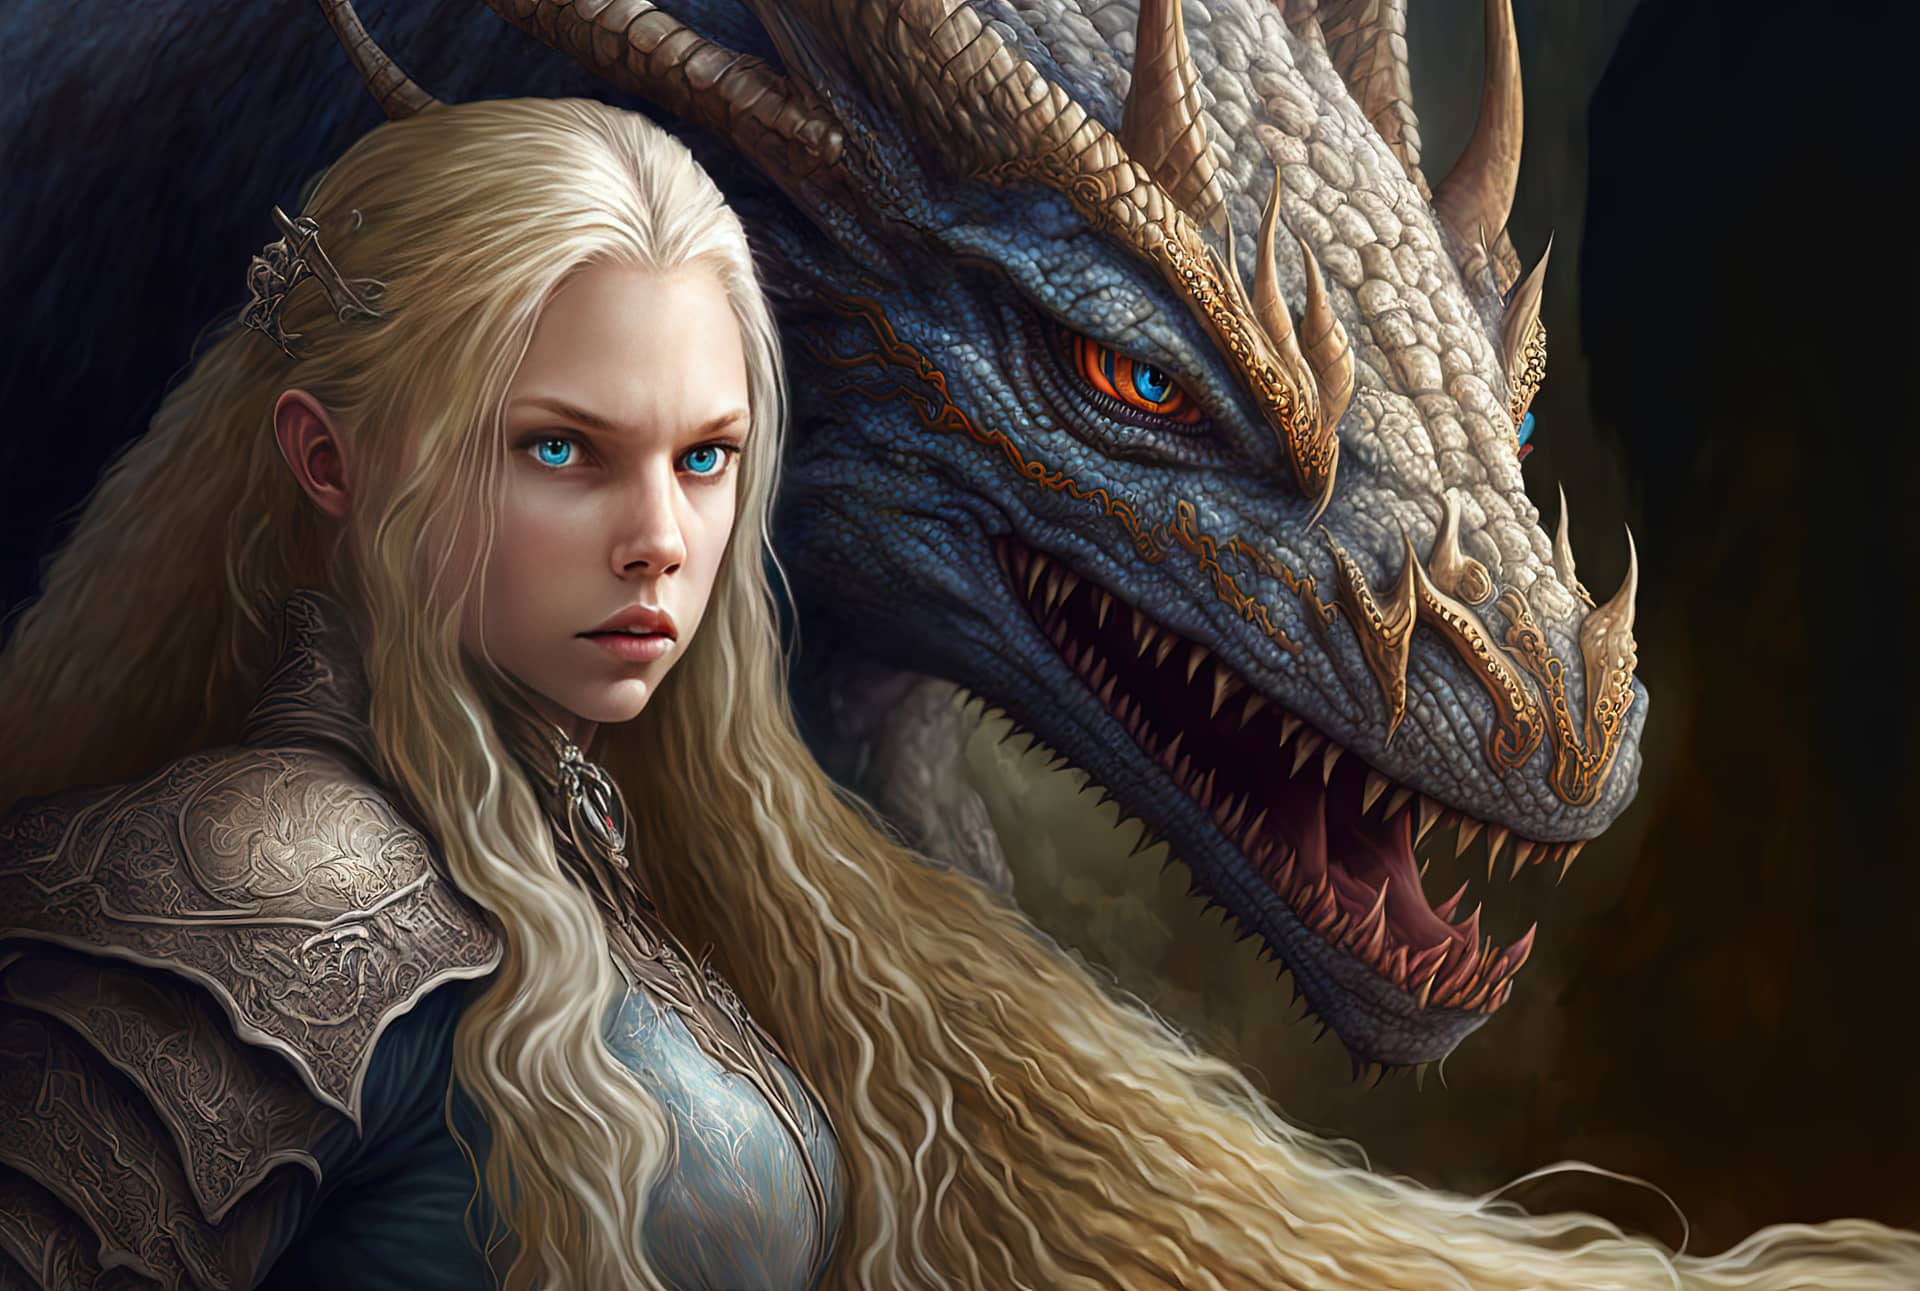 Cool images for profile her dragon pet fantasy creature imaginative image